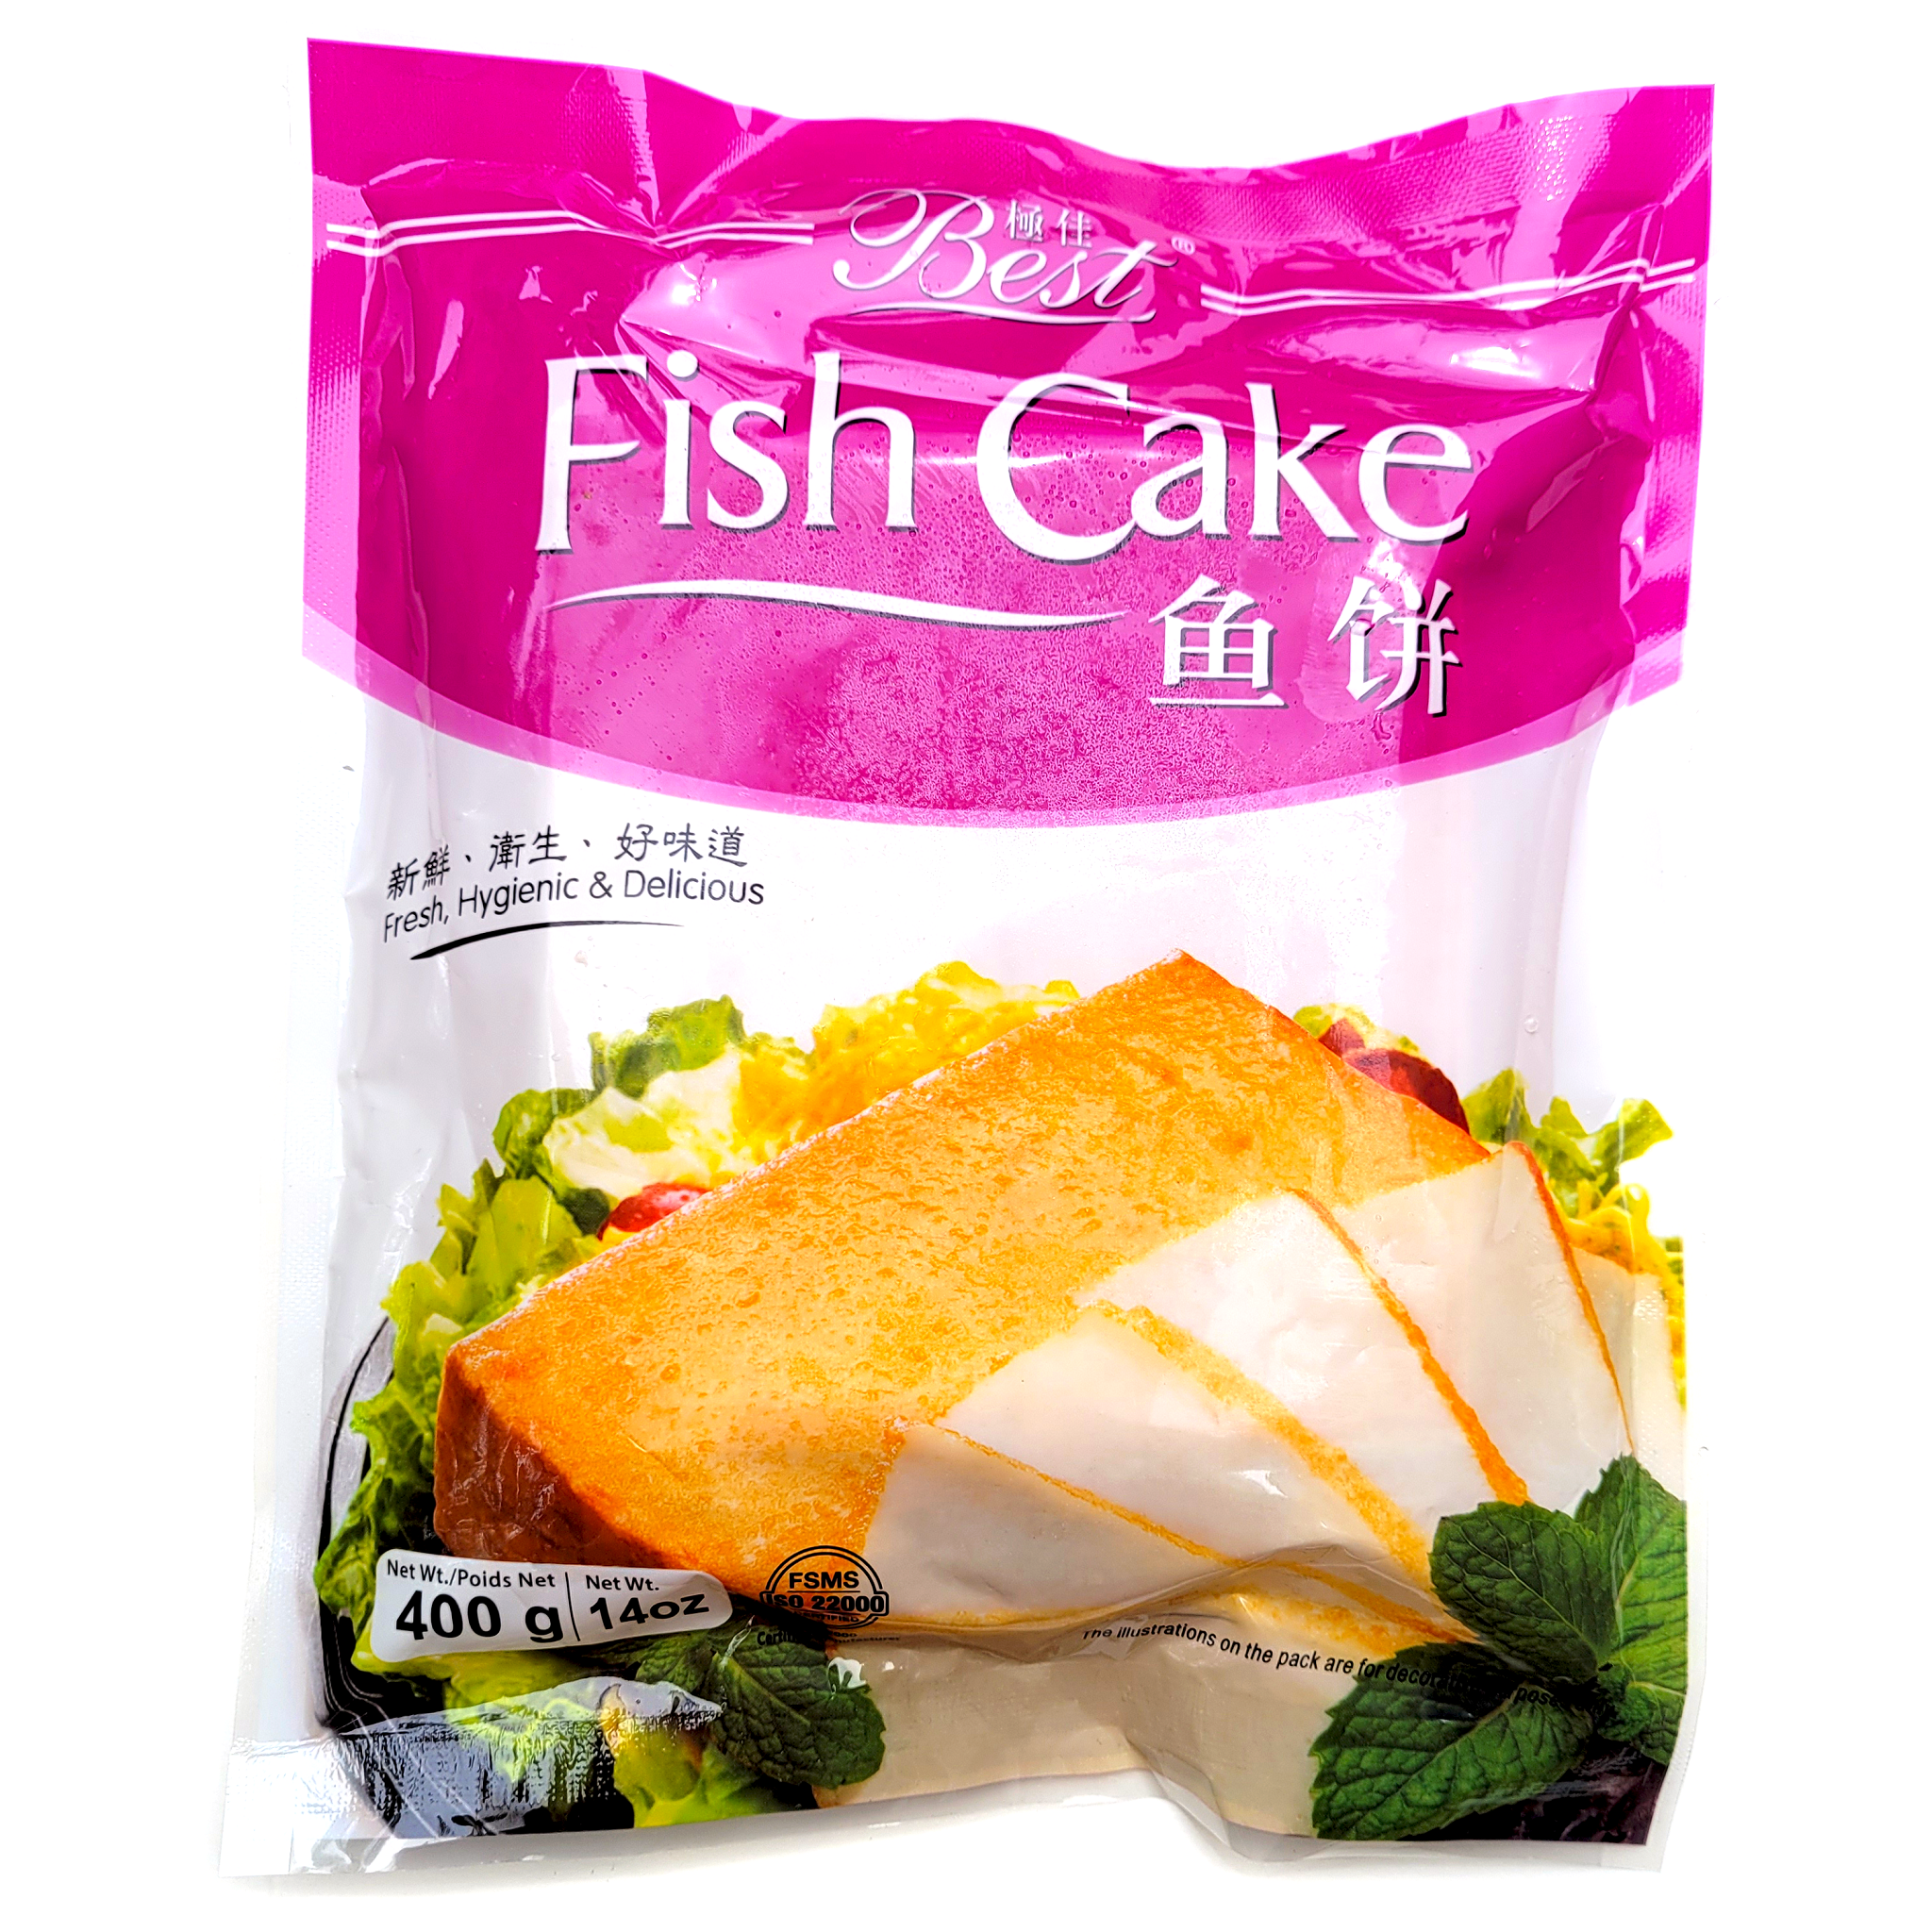 Best Fish Cake